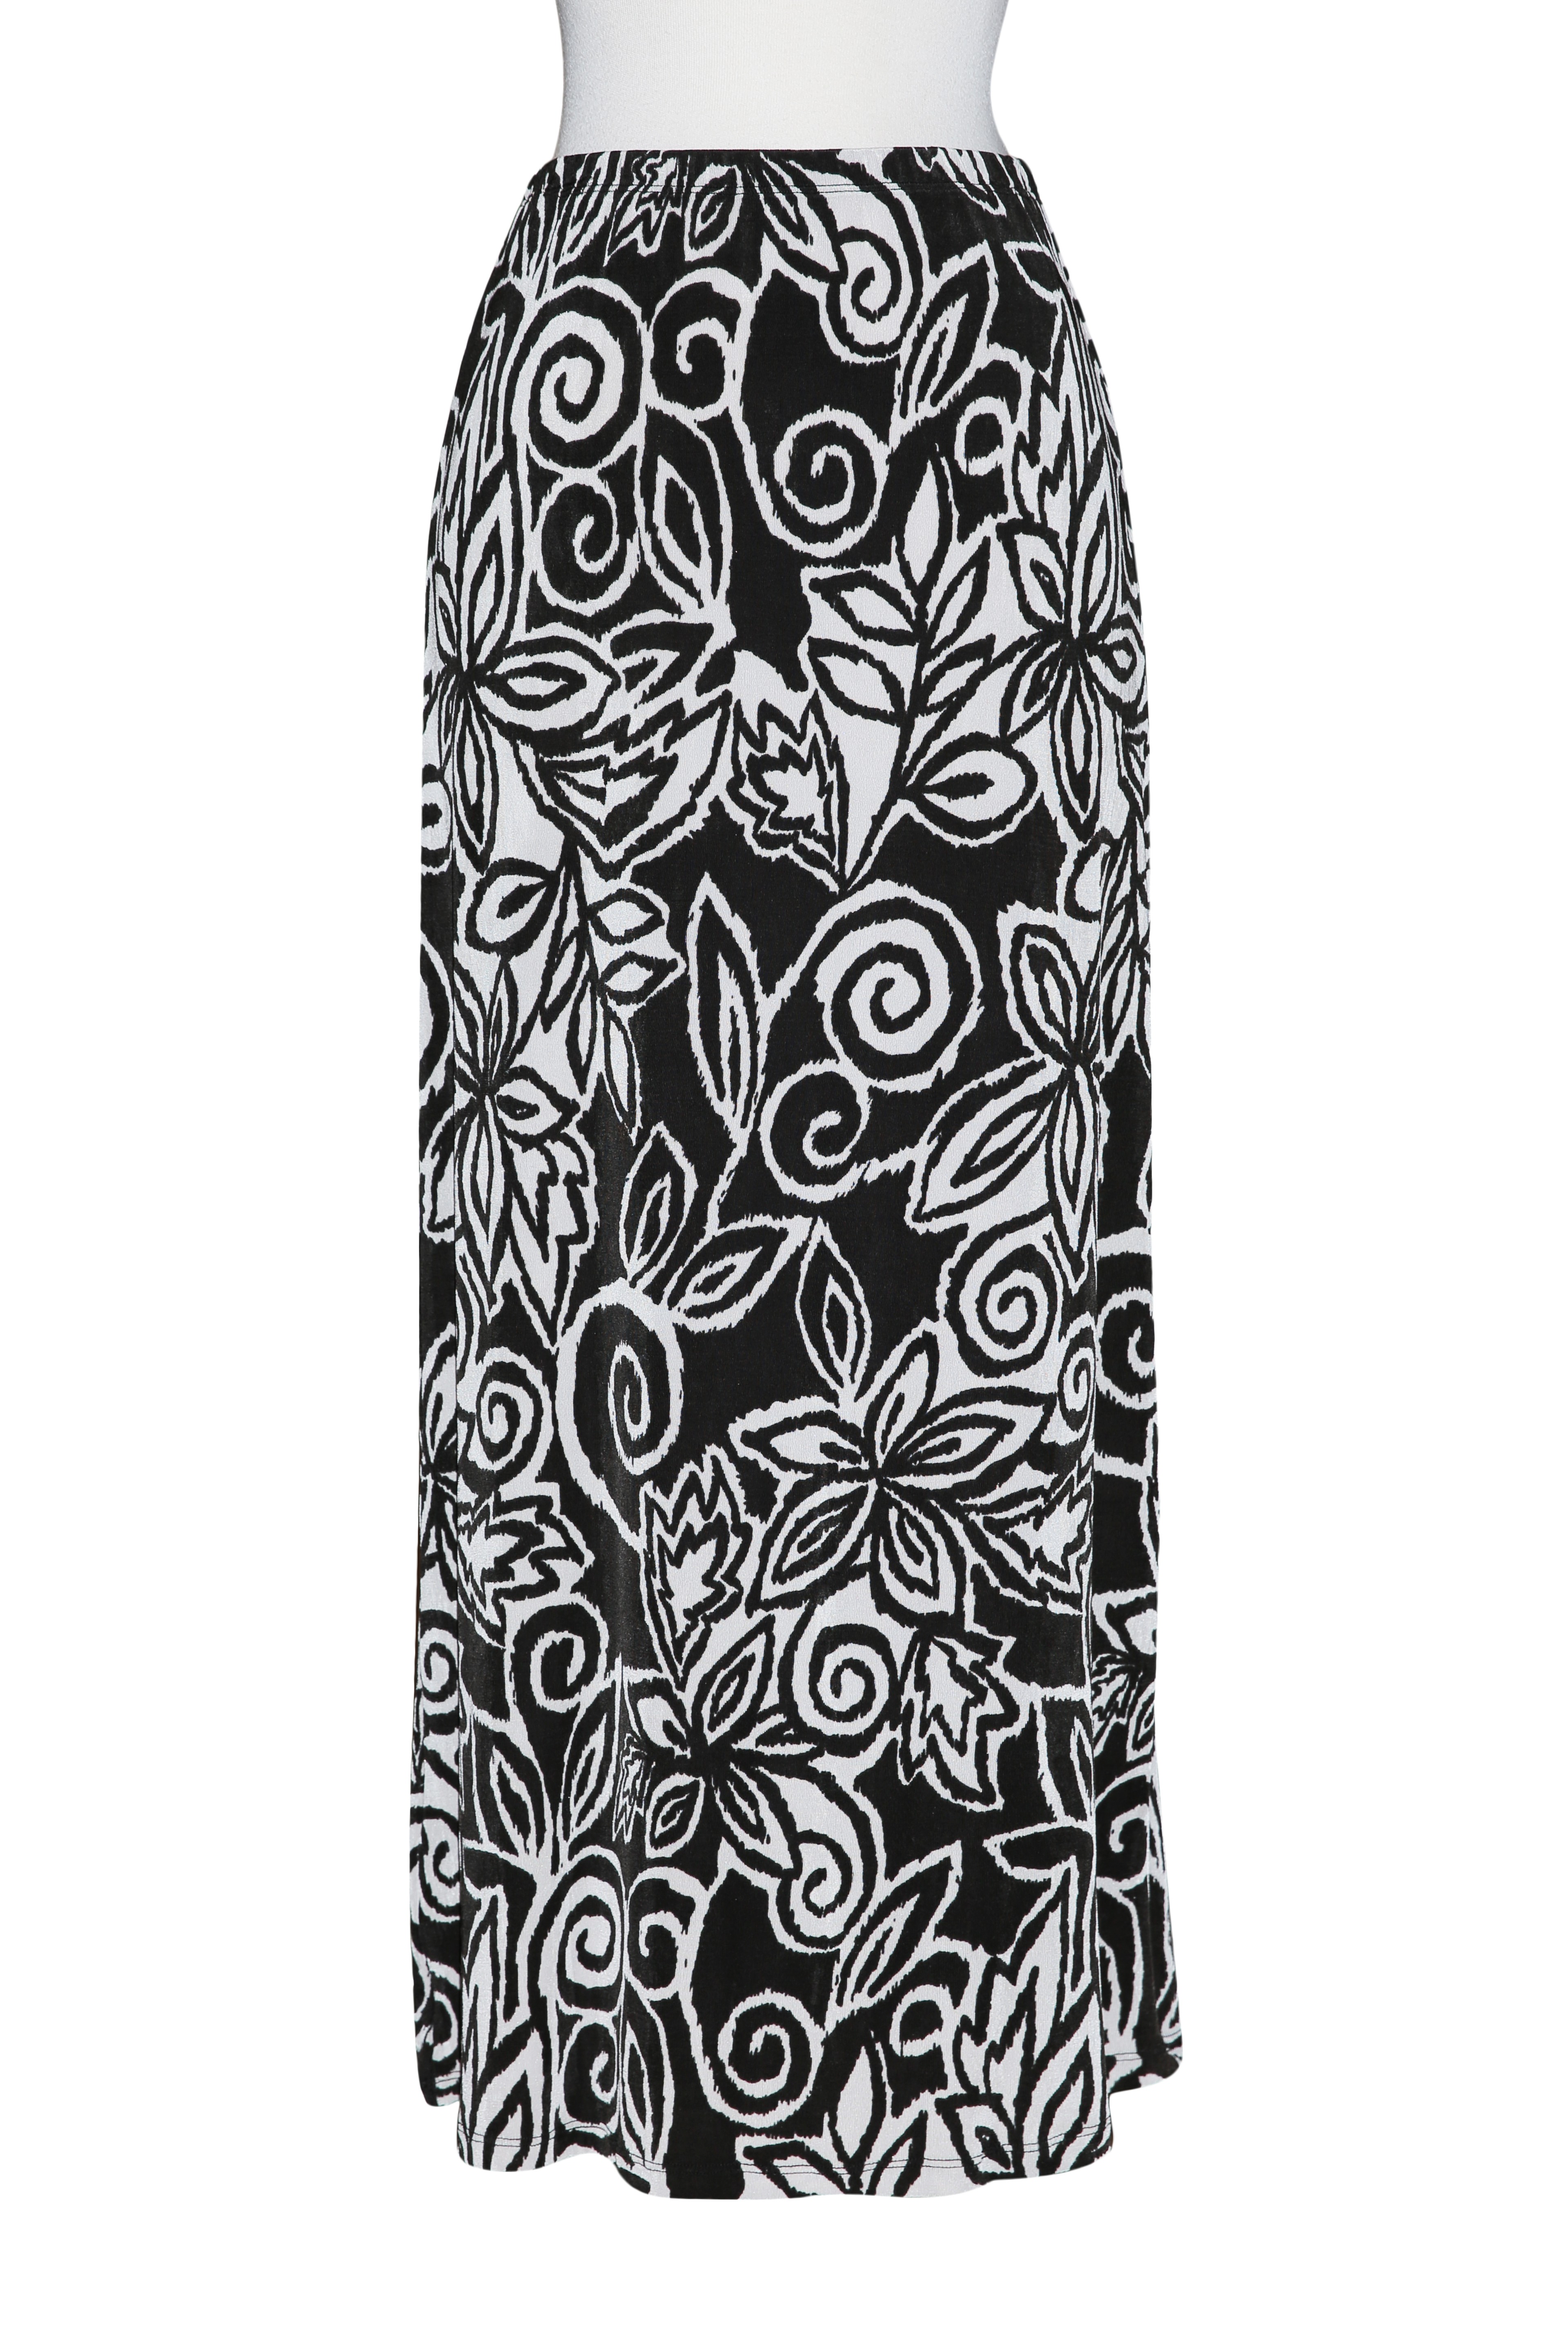 Plus Size Black & White Floral Slinky Skirt